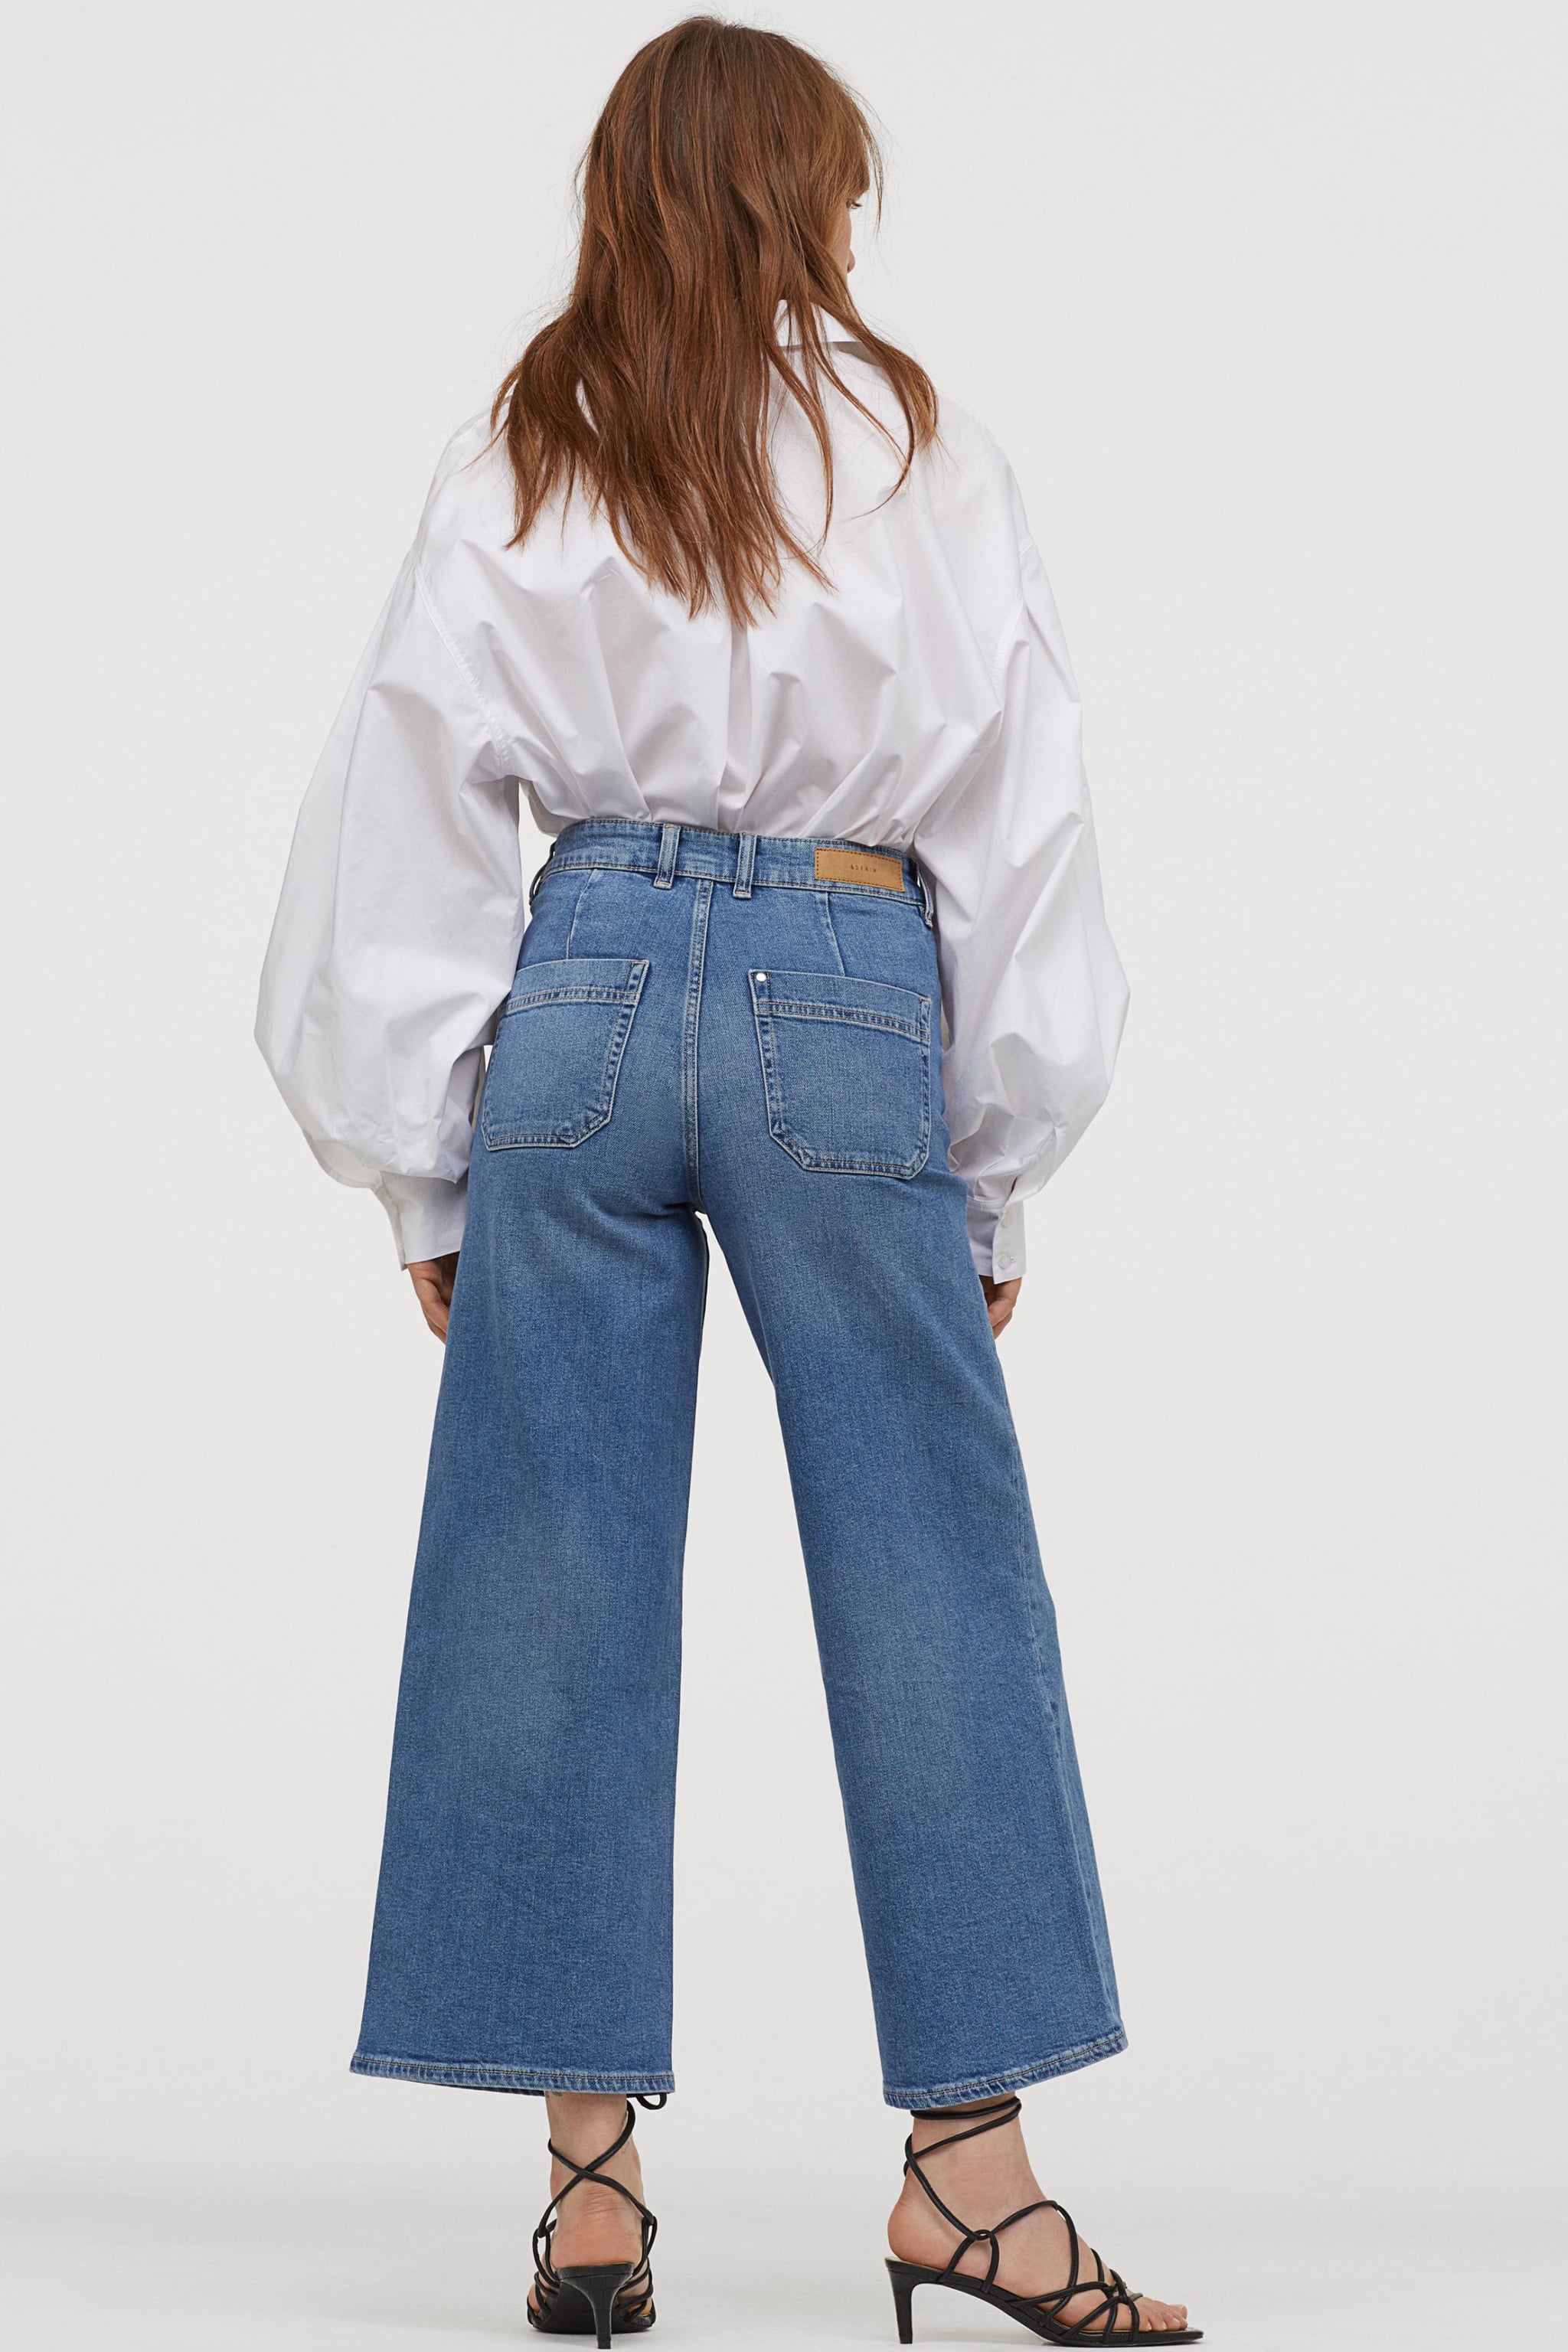 h&m women's jeans australia